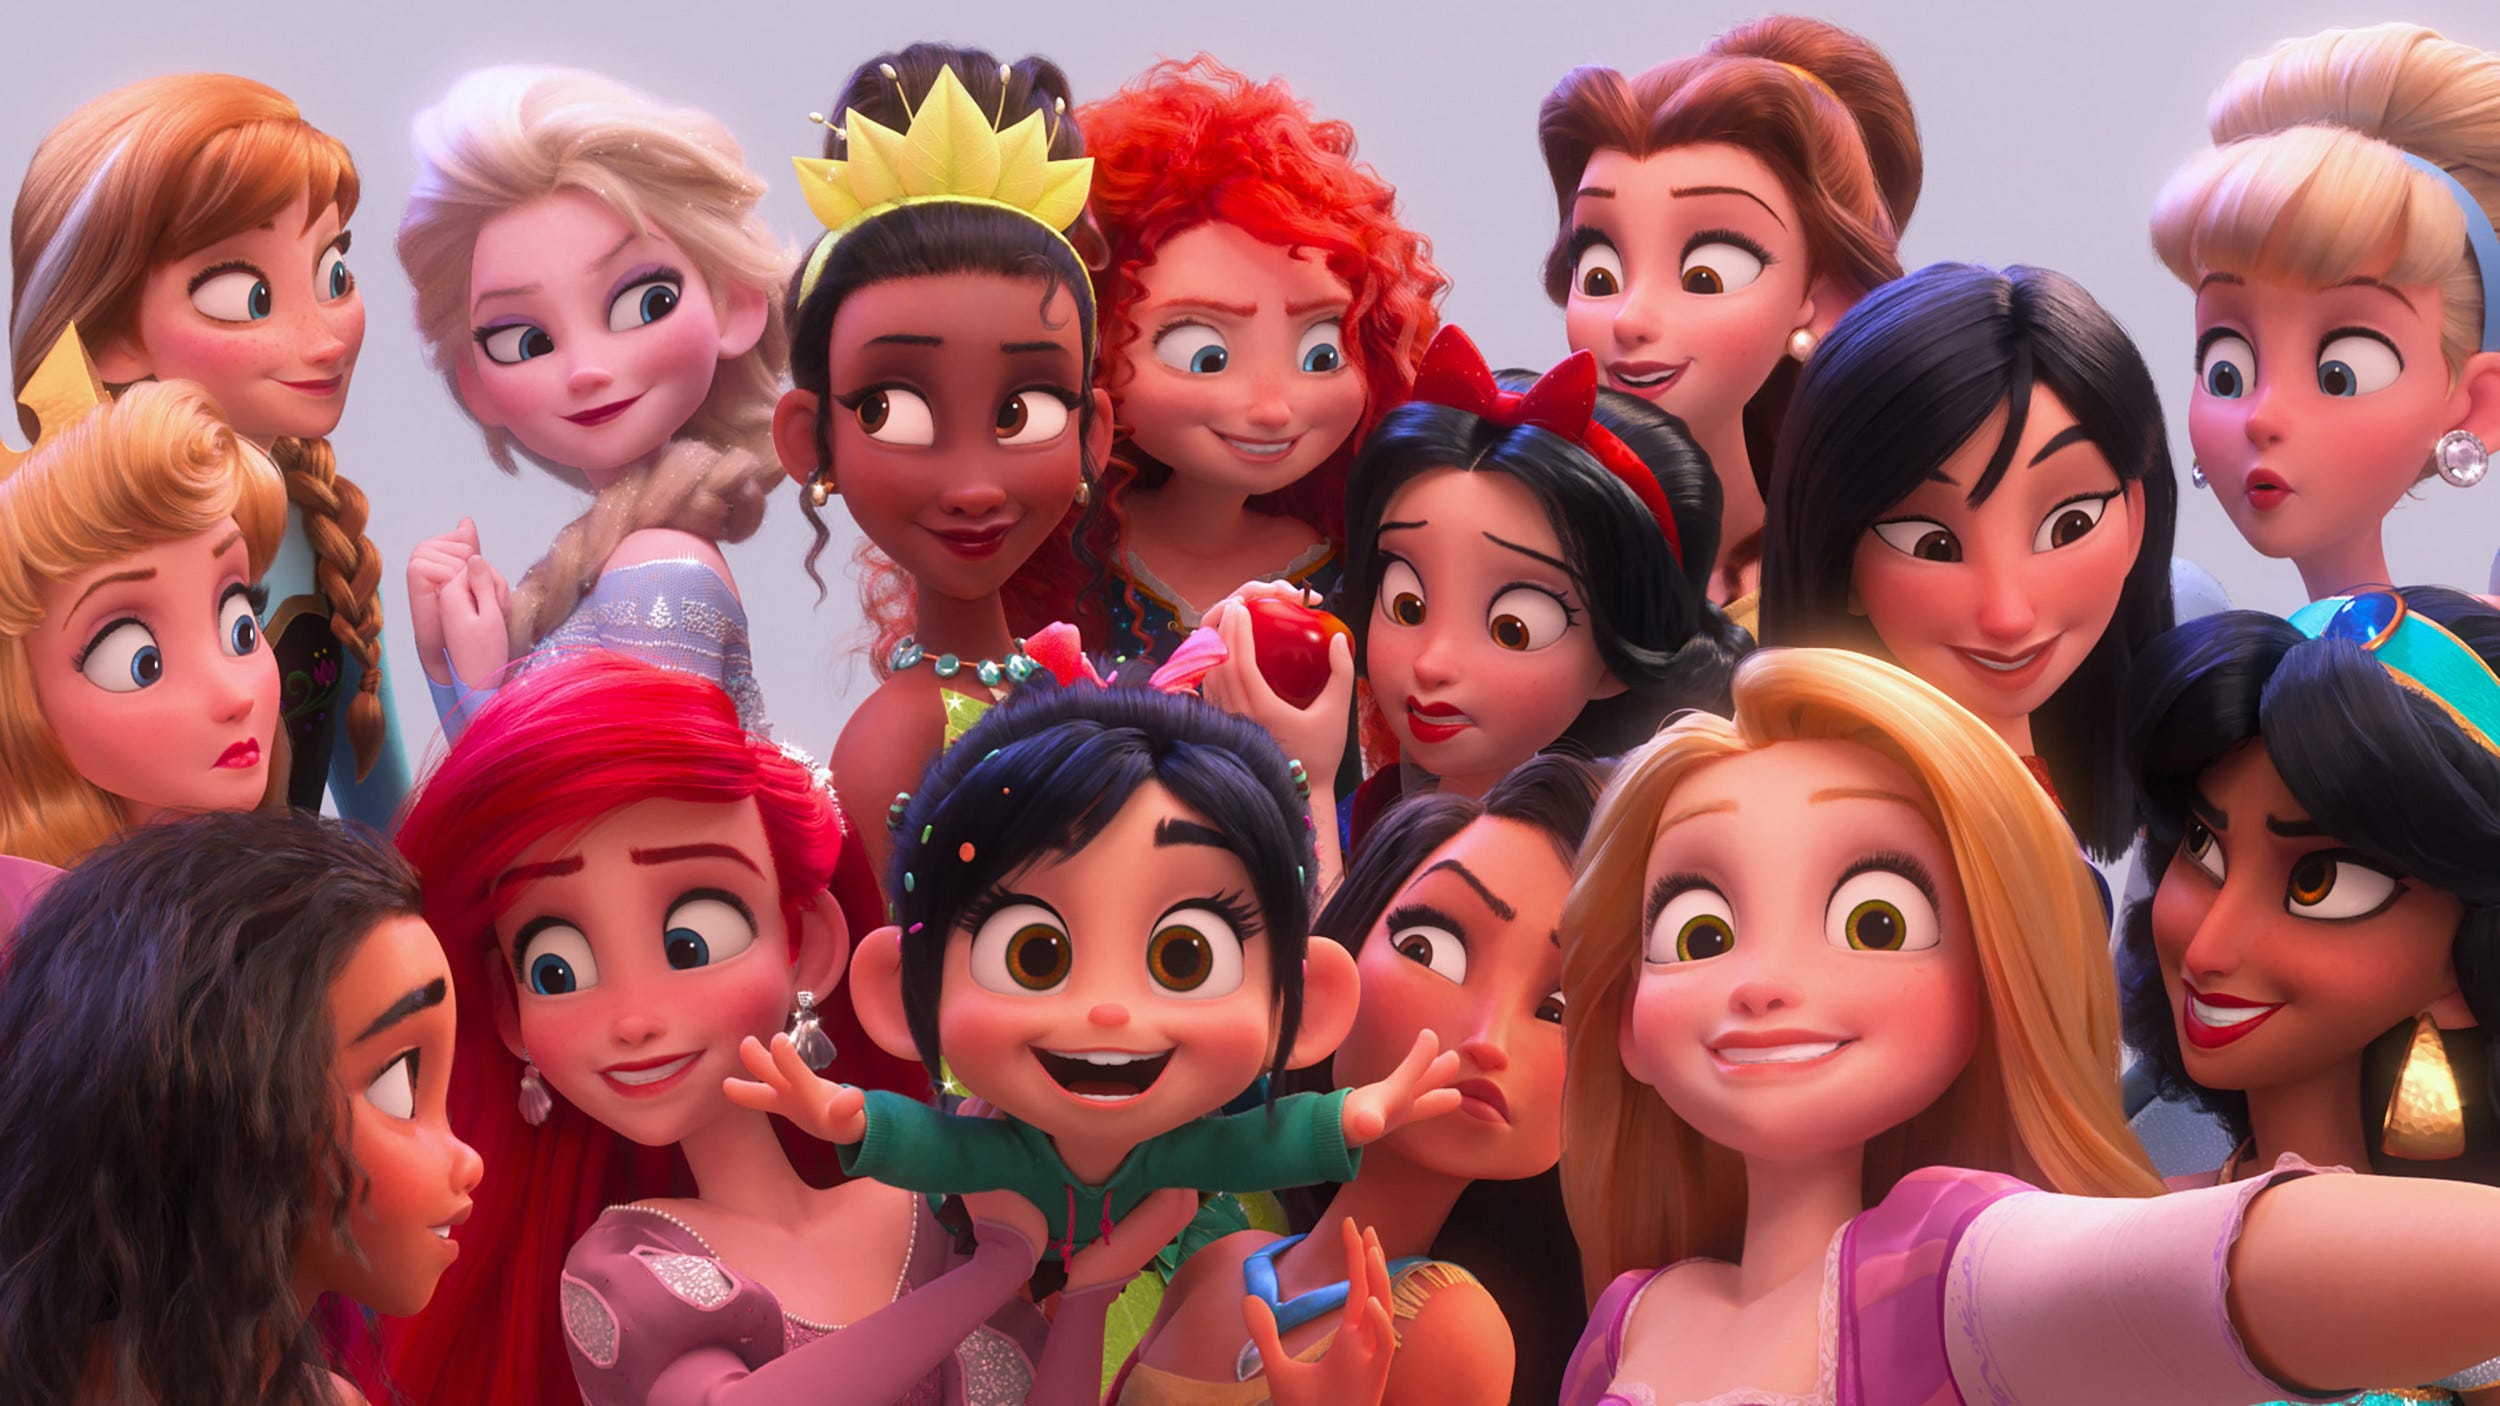 Disney Princesses Art Frozen Elsa Cinderella Snow White Ariel Rapunzel etc